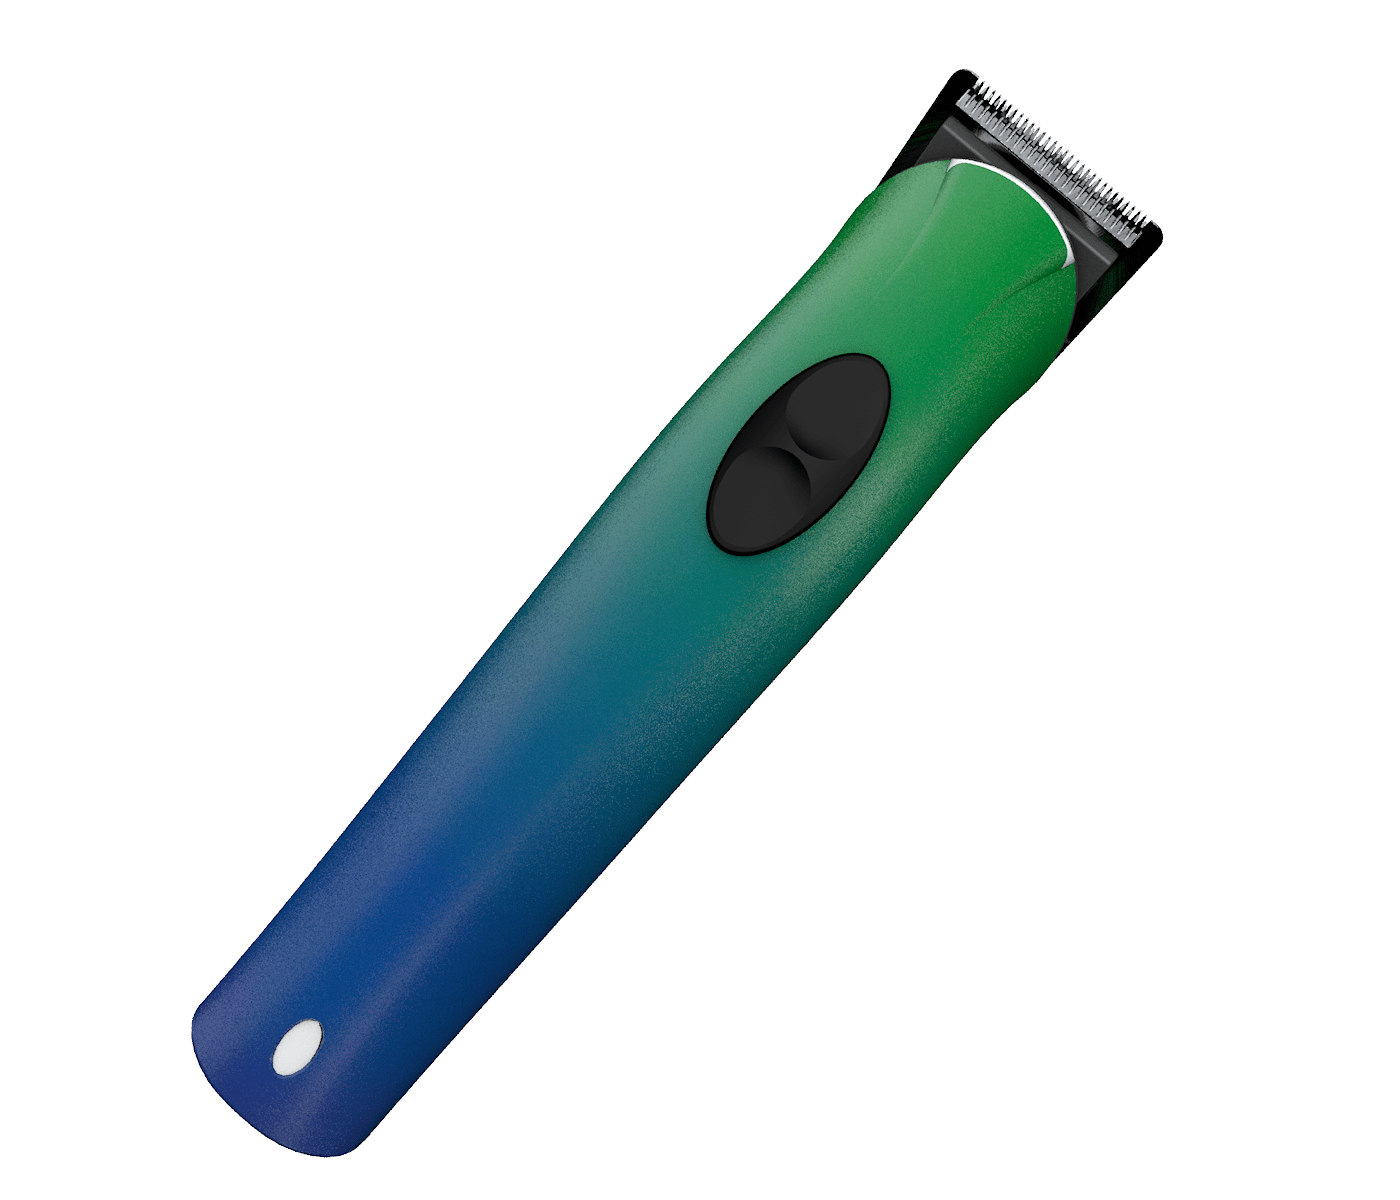 hair trimmer - OT 11 B Hair Trimmer von EXONDA - blue green